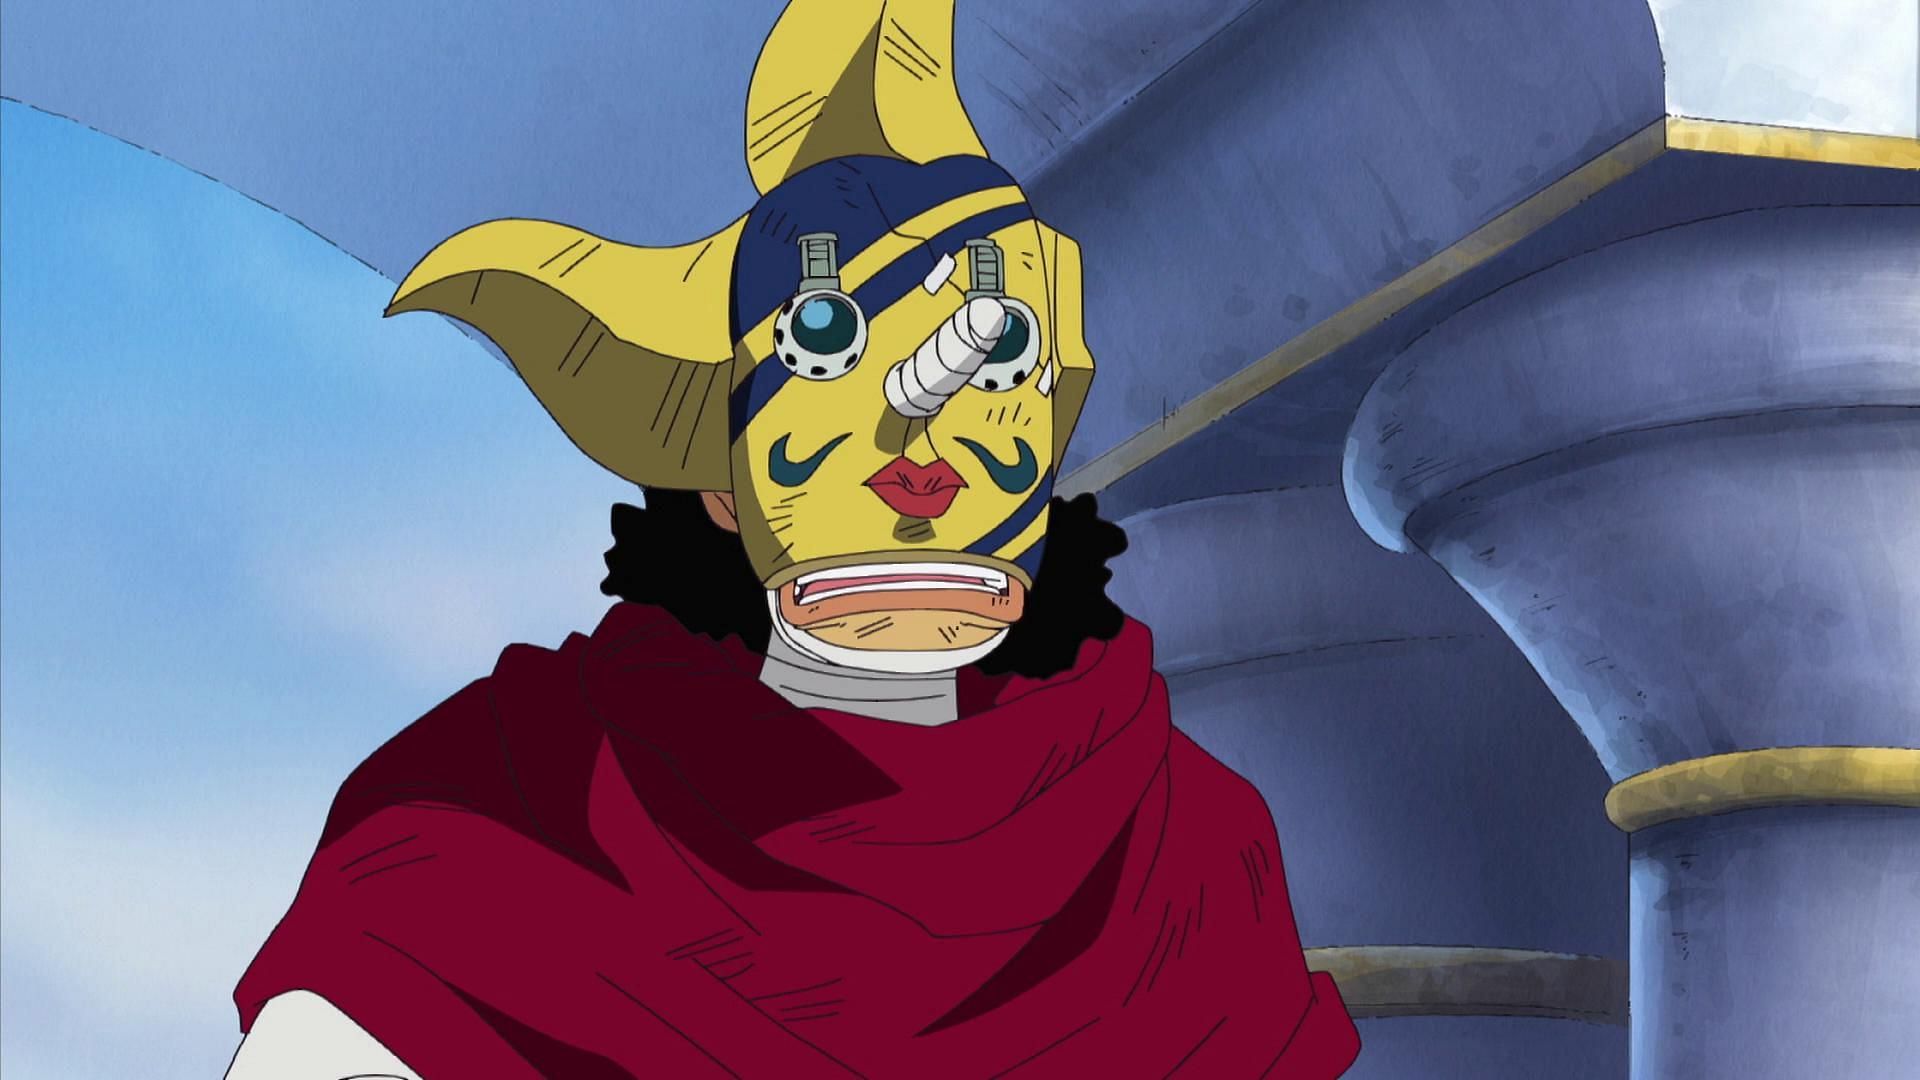 Usopp as Sogeking in the One Piece anime (Image via Toei Animation)